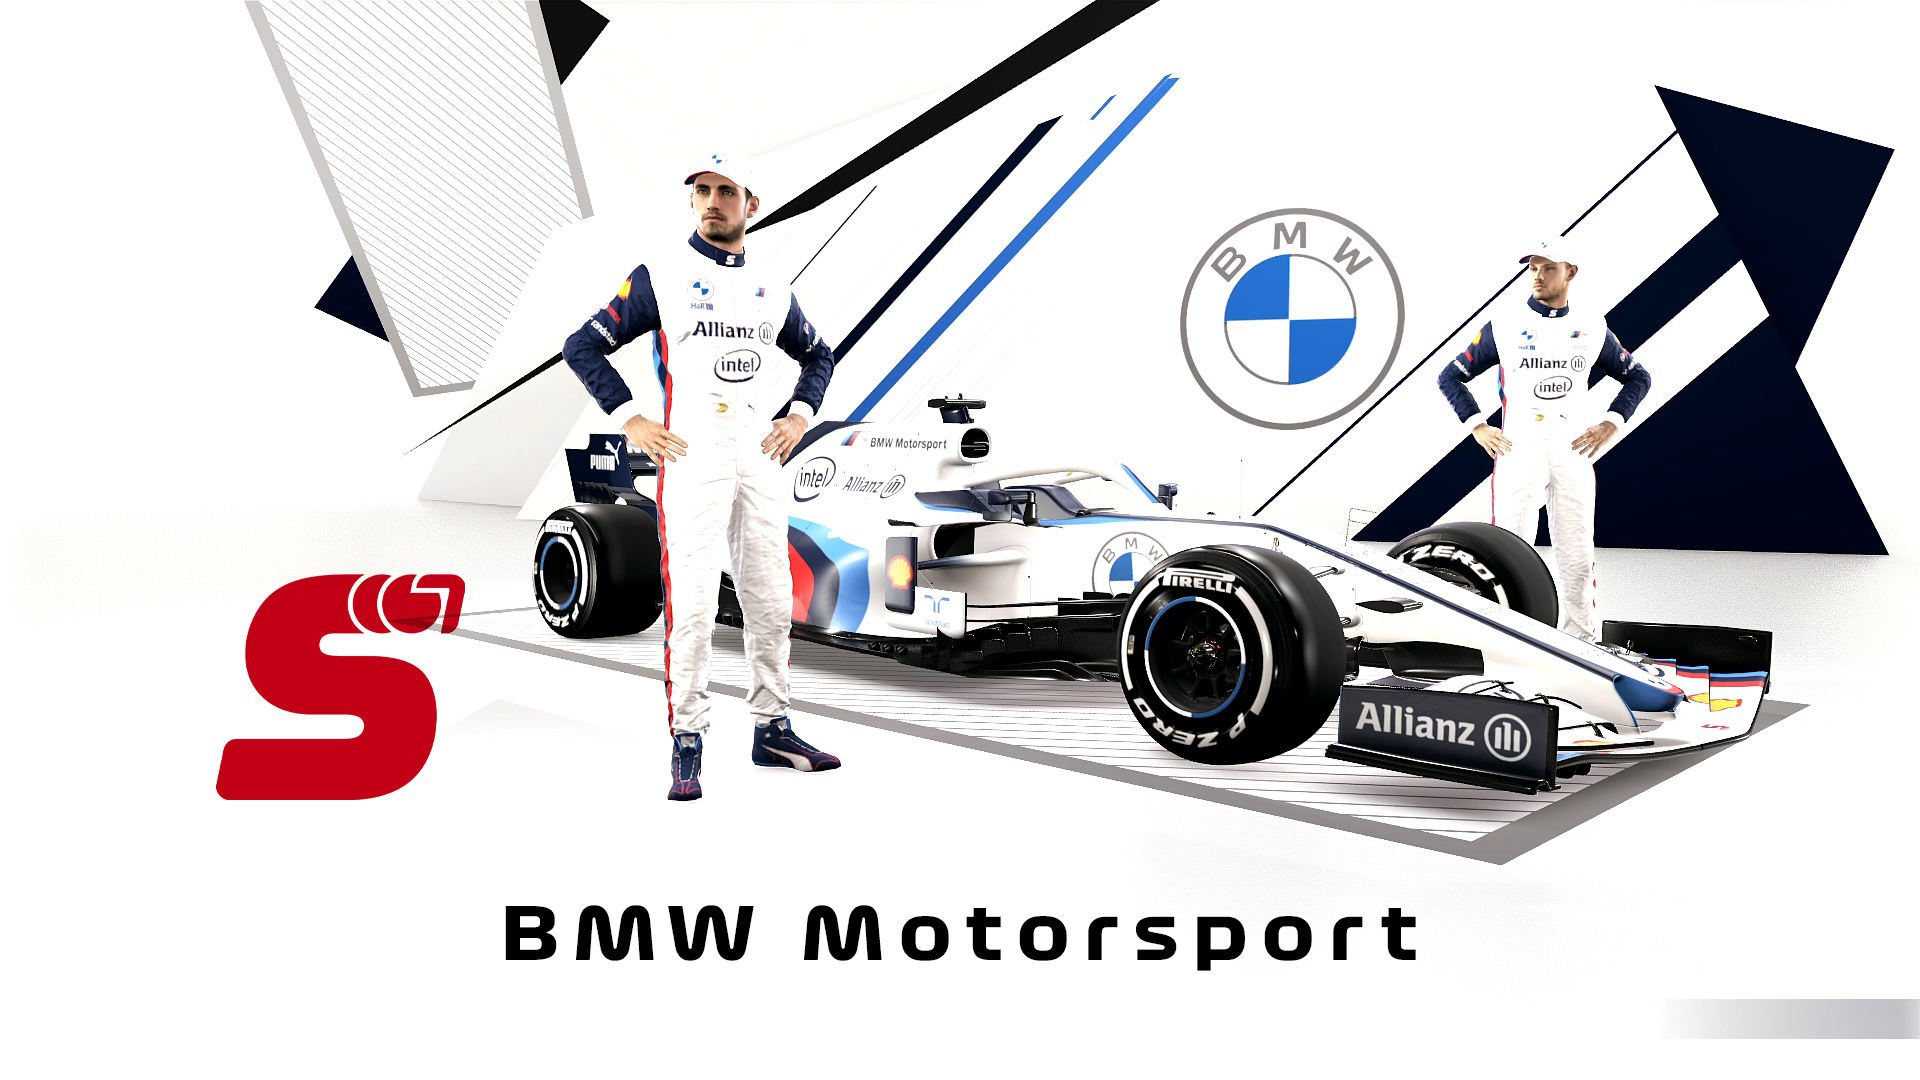 bmw motorsport team.jpg